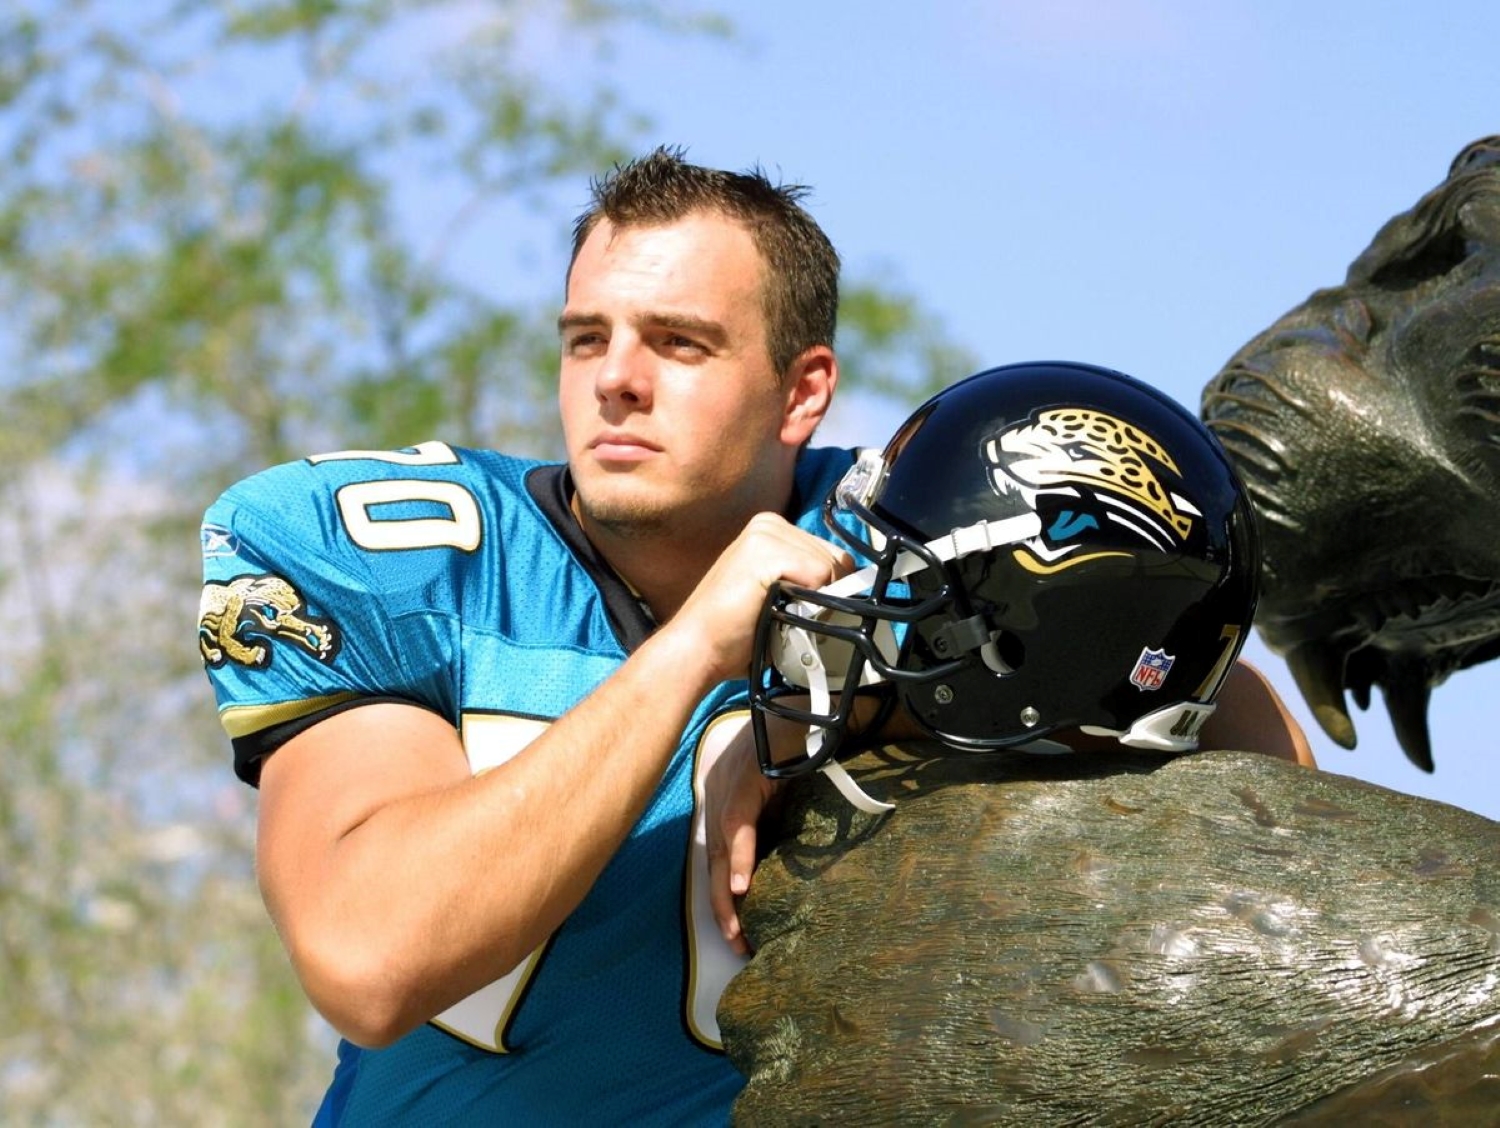 Former NFL player Patrick Venzke poses for a picture in his Jacksonville Jaguars uniform.